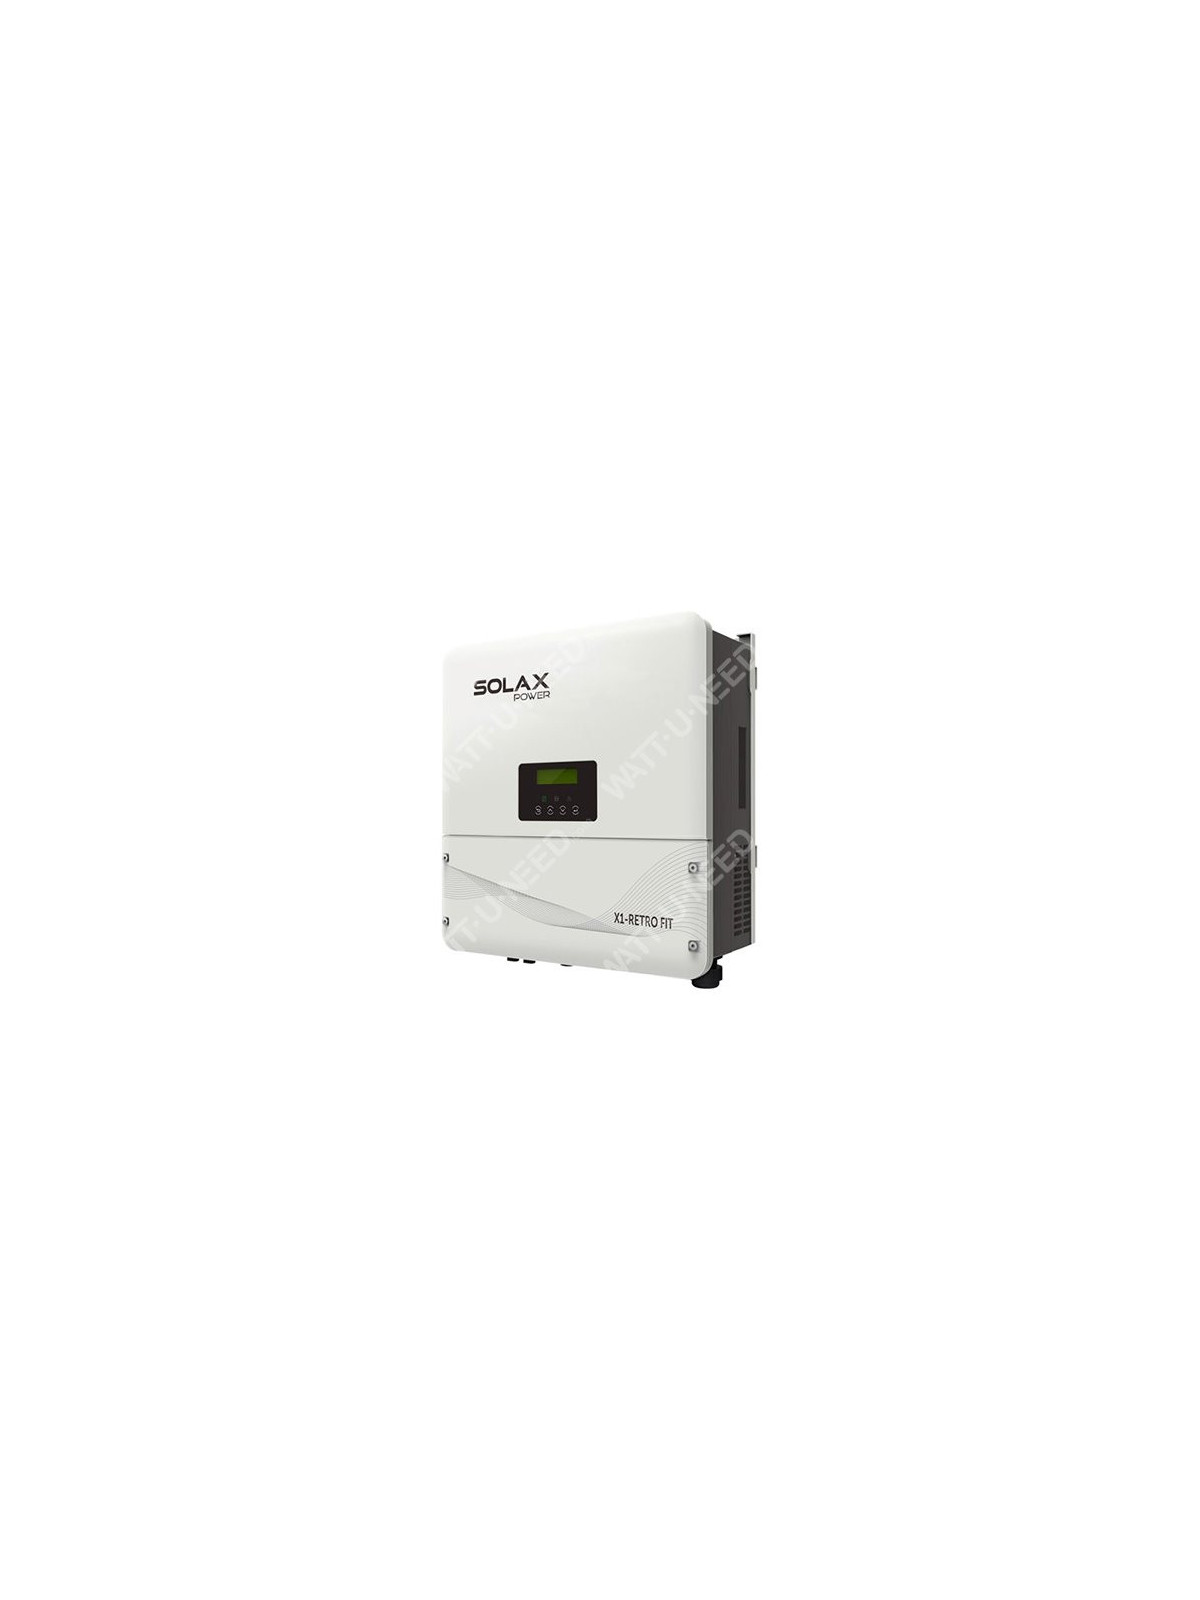 Inverter Solax X1 Retro Fit 3.7 kW